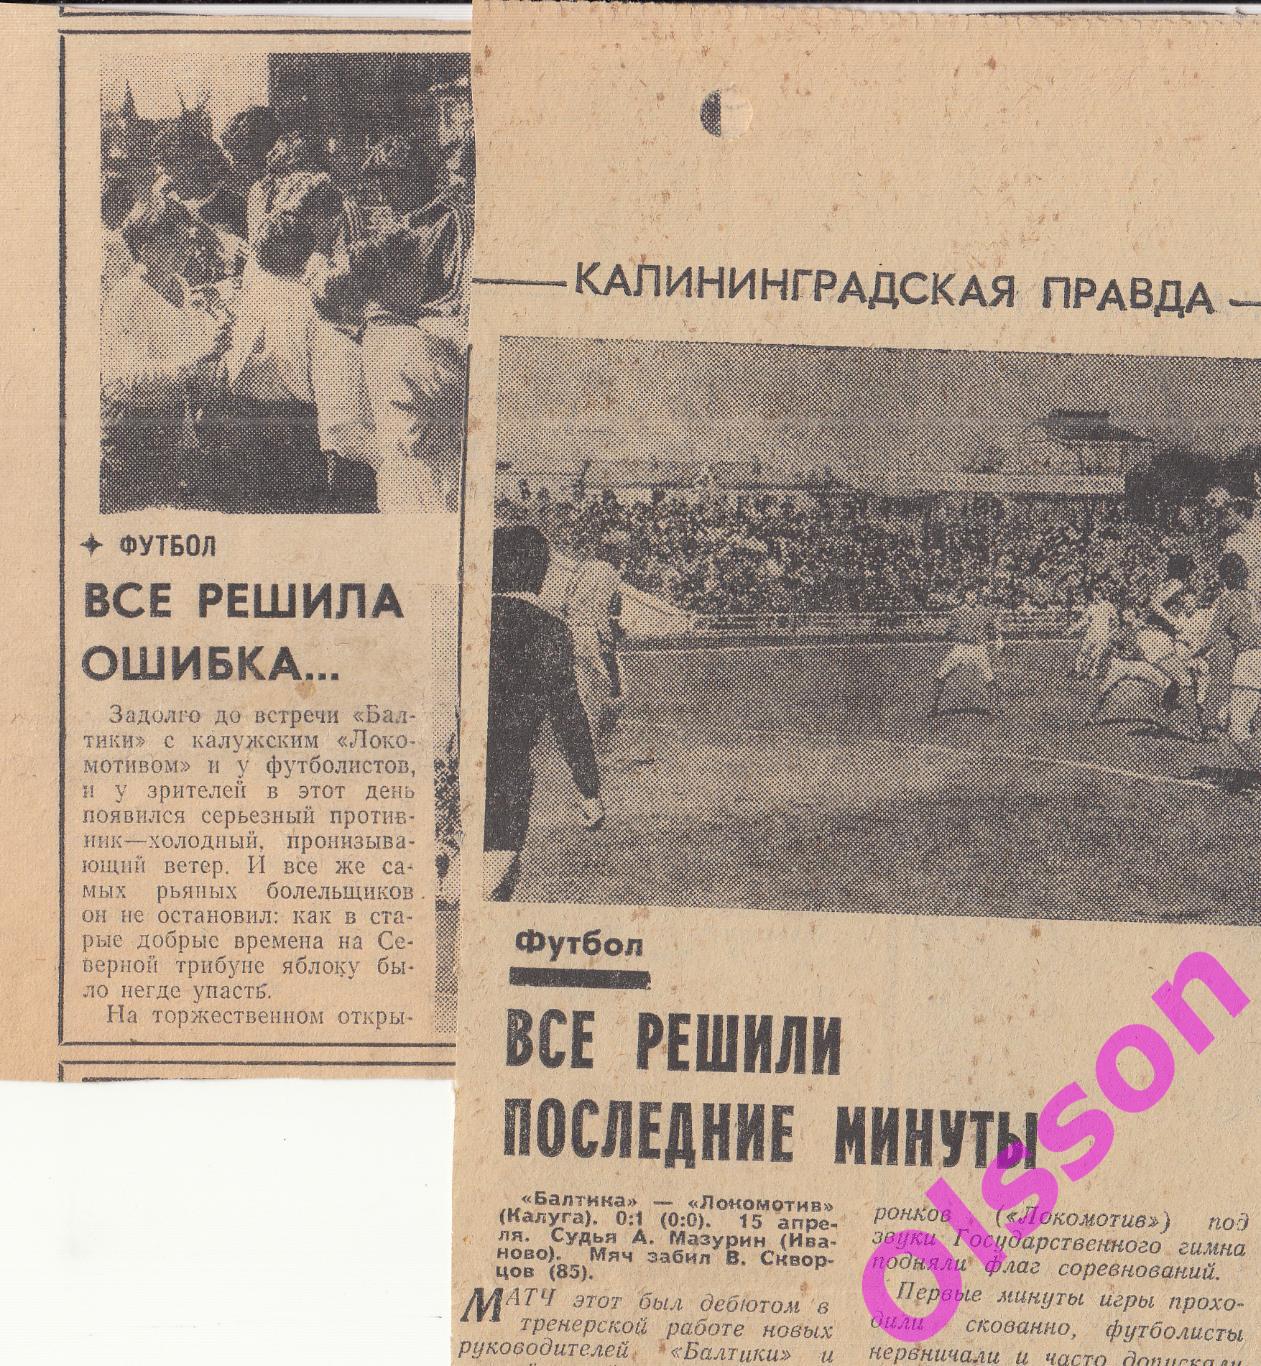 Отчеты о матче. Балтика Калининград - Локомотив Калуга 1979 (2 отчета)